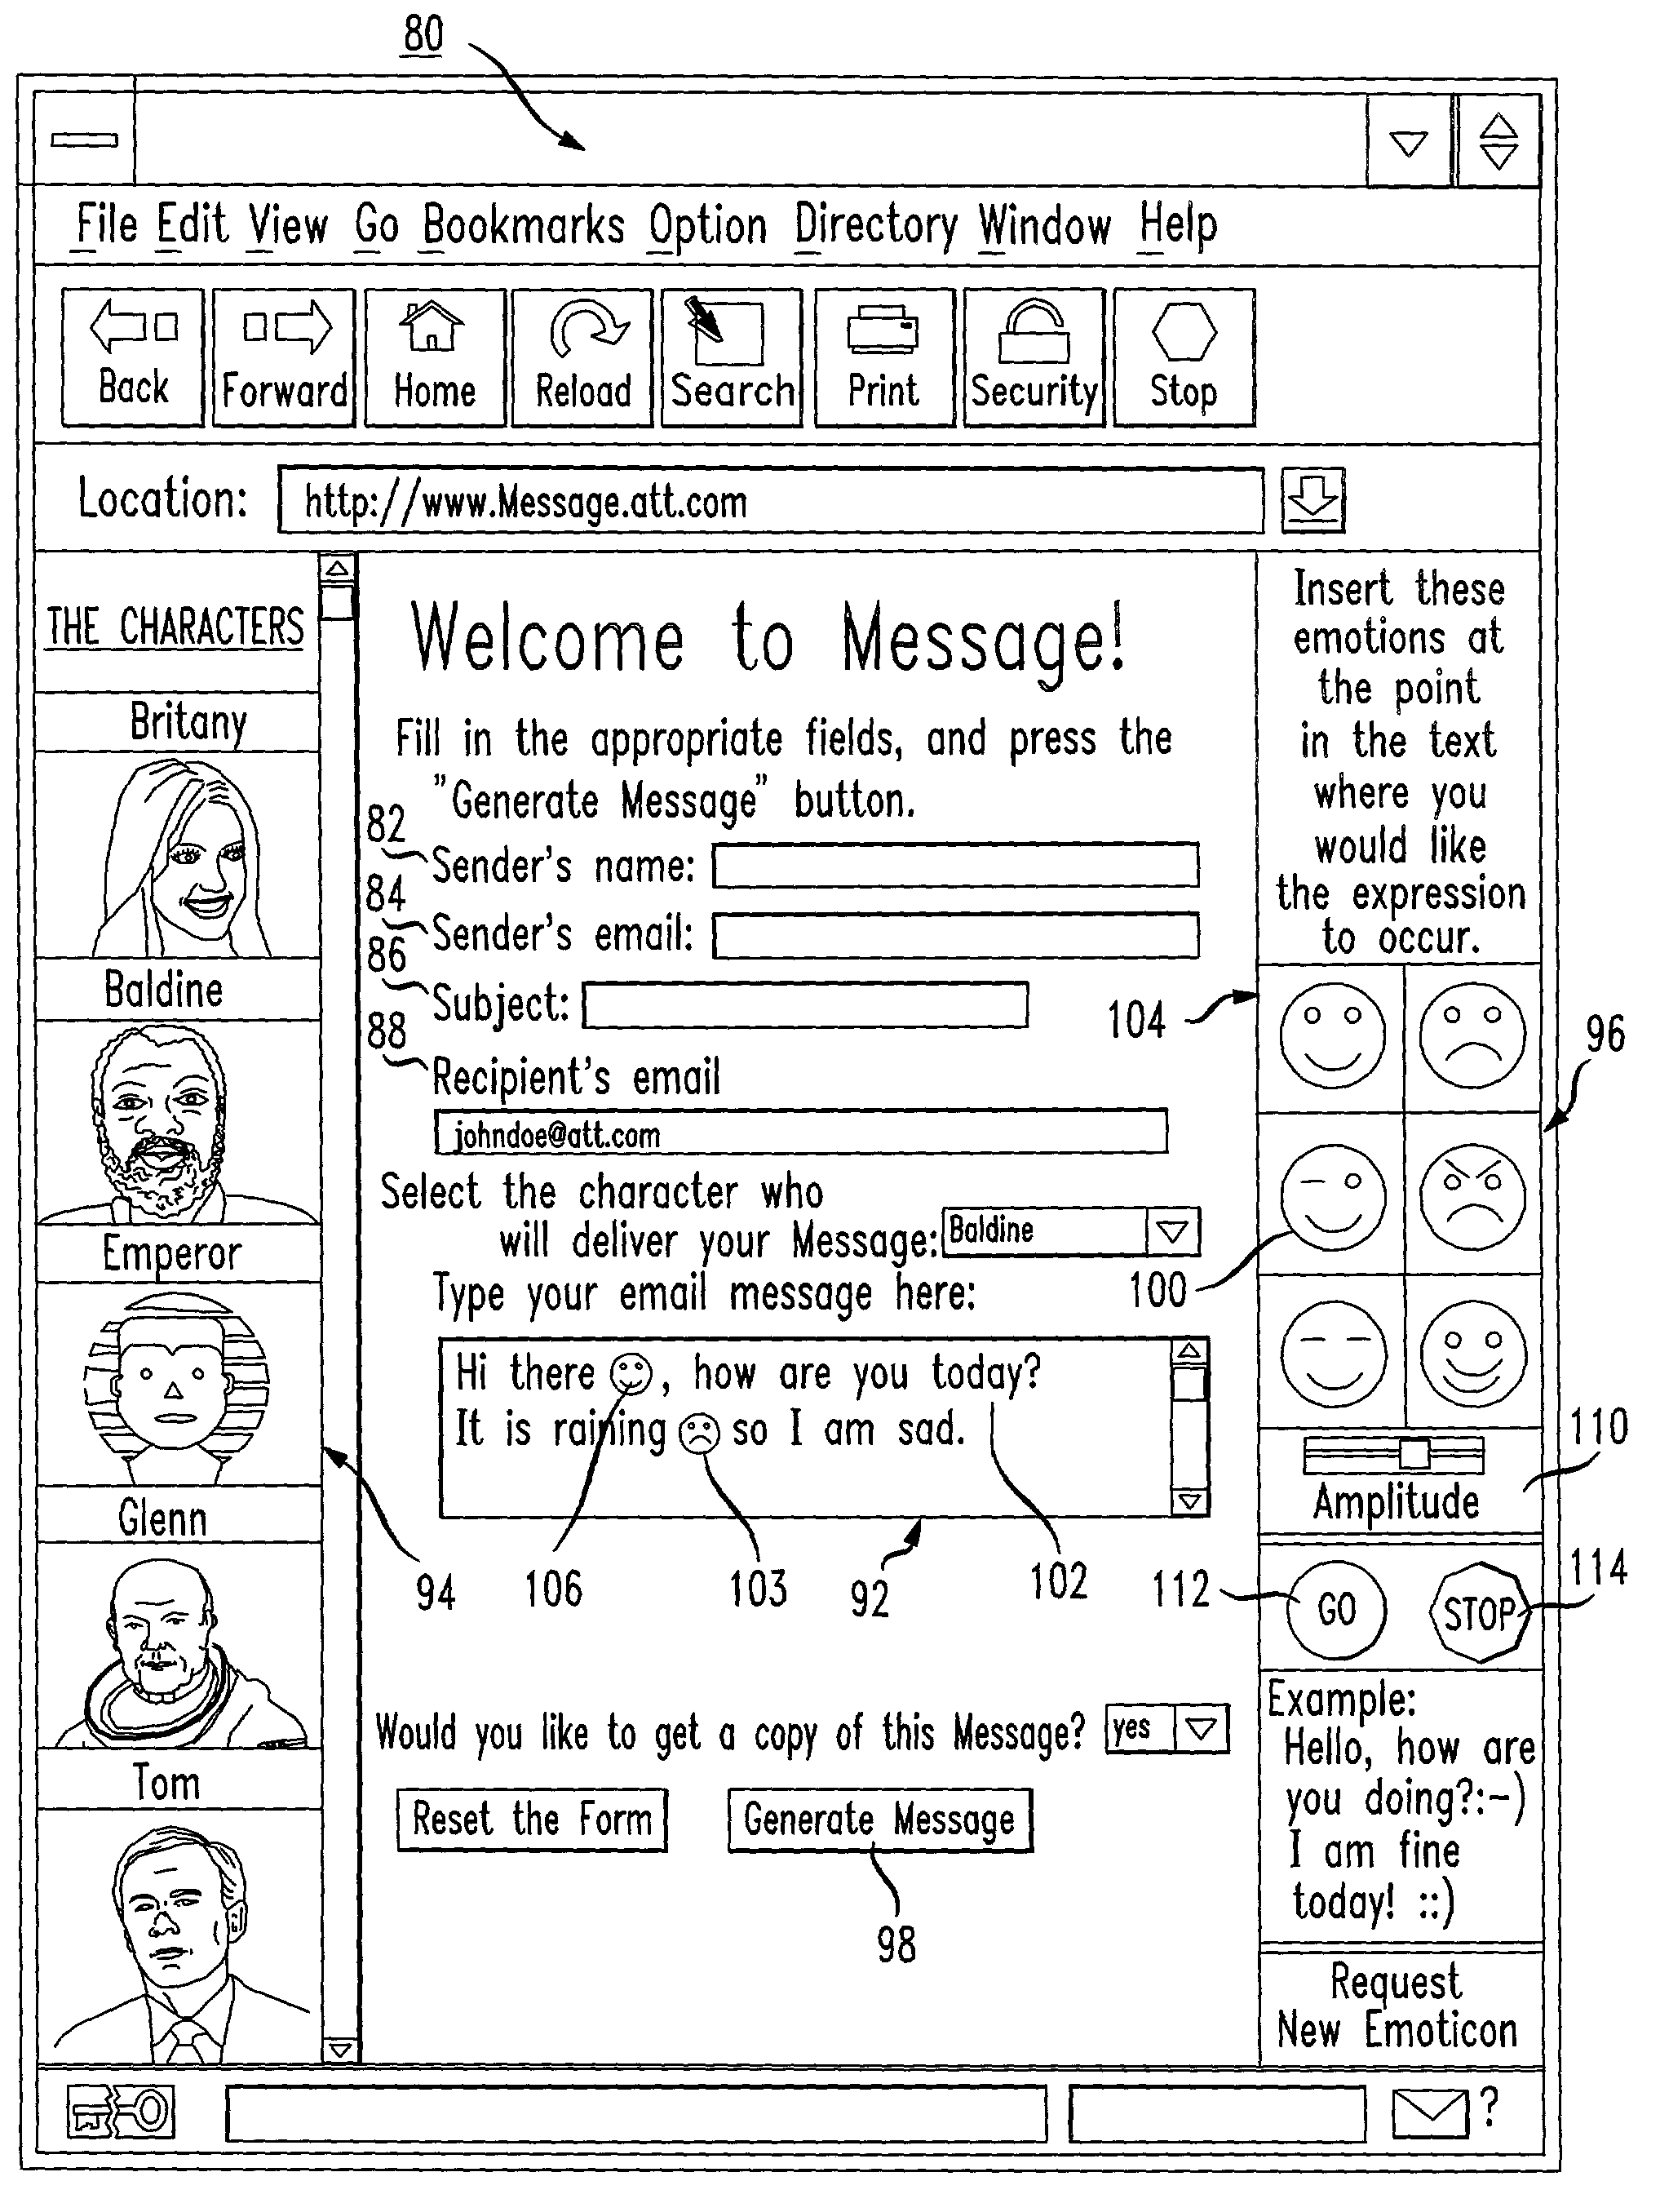 Method for sending multi-media messages using emoticons